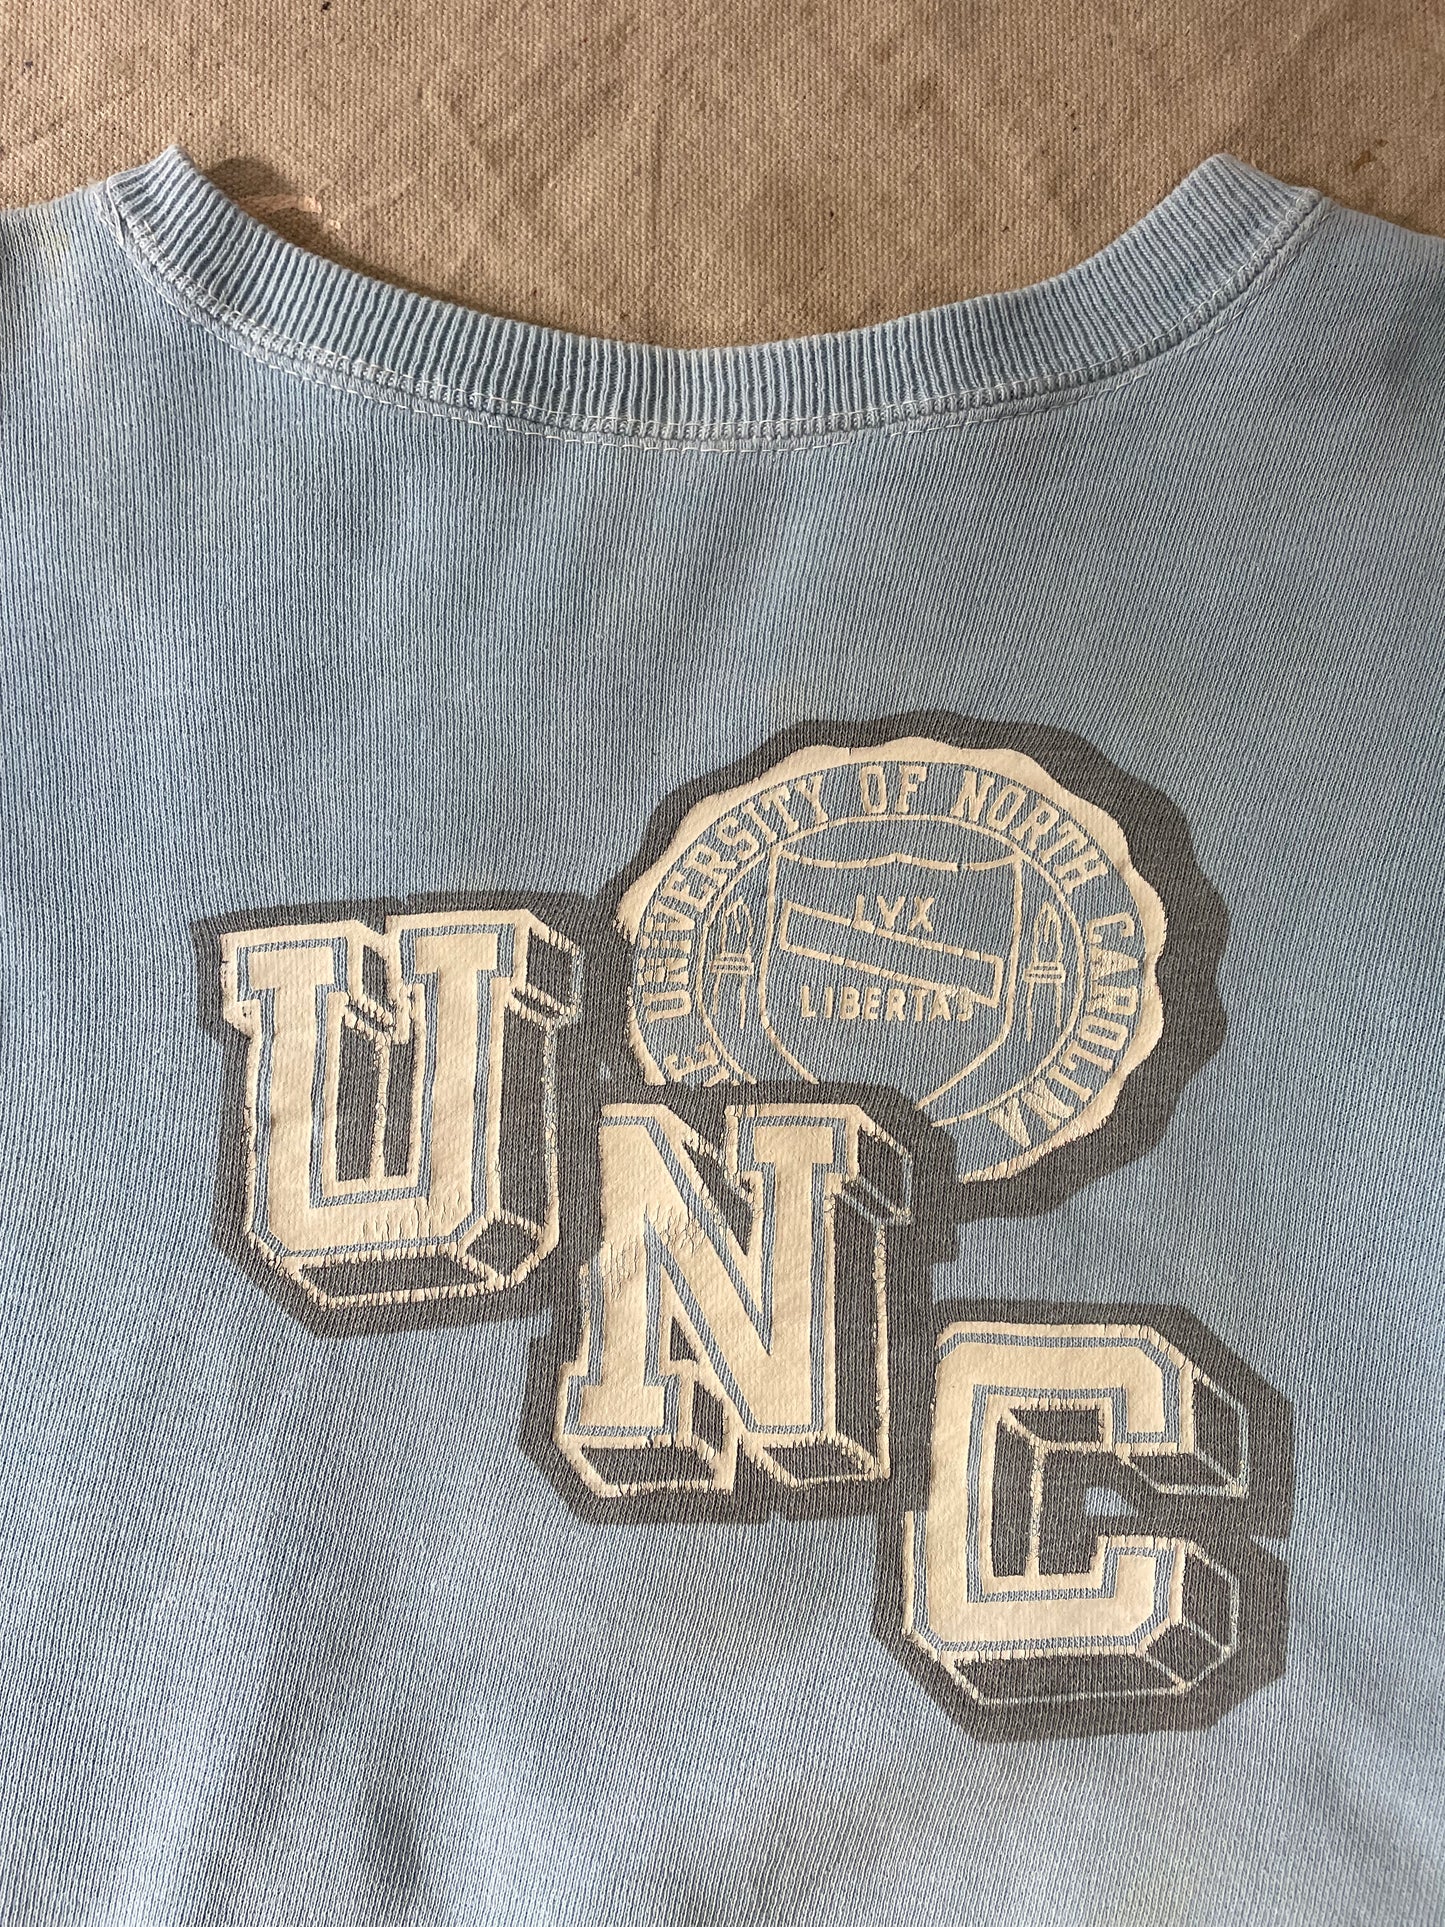 60s UNC University Of North Carolina Sweatshirt